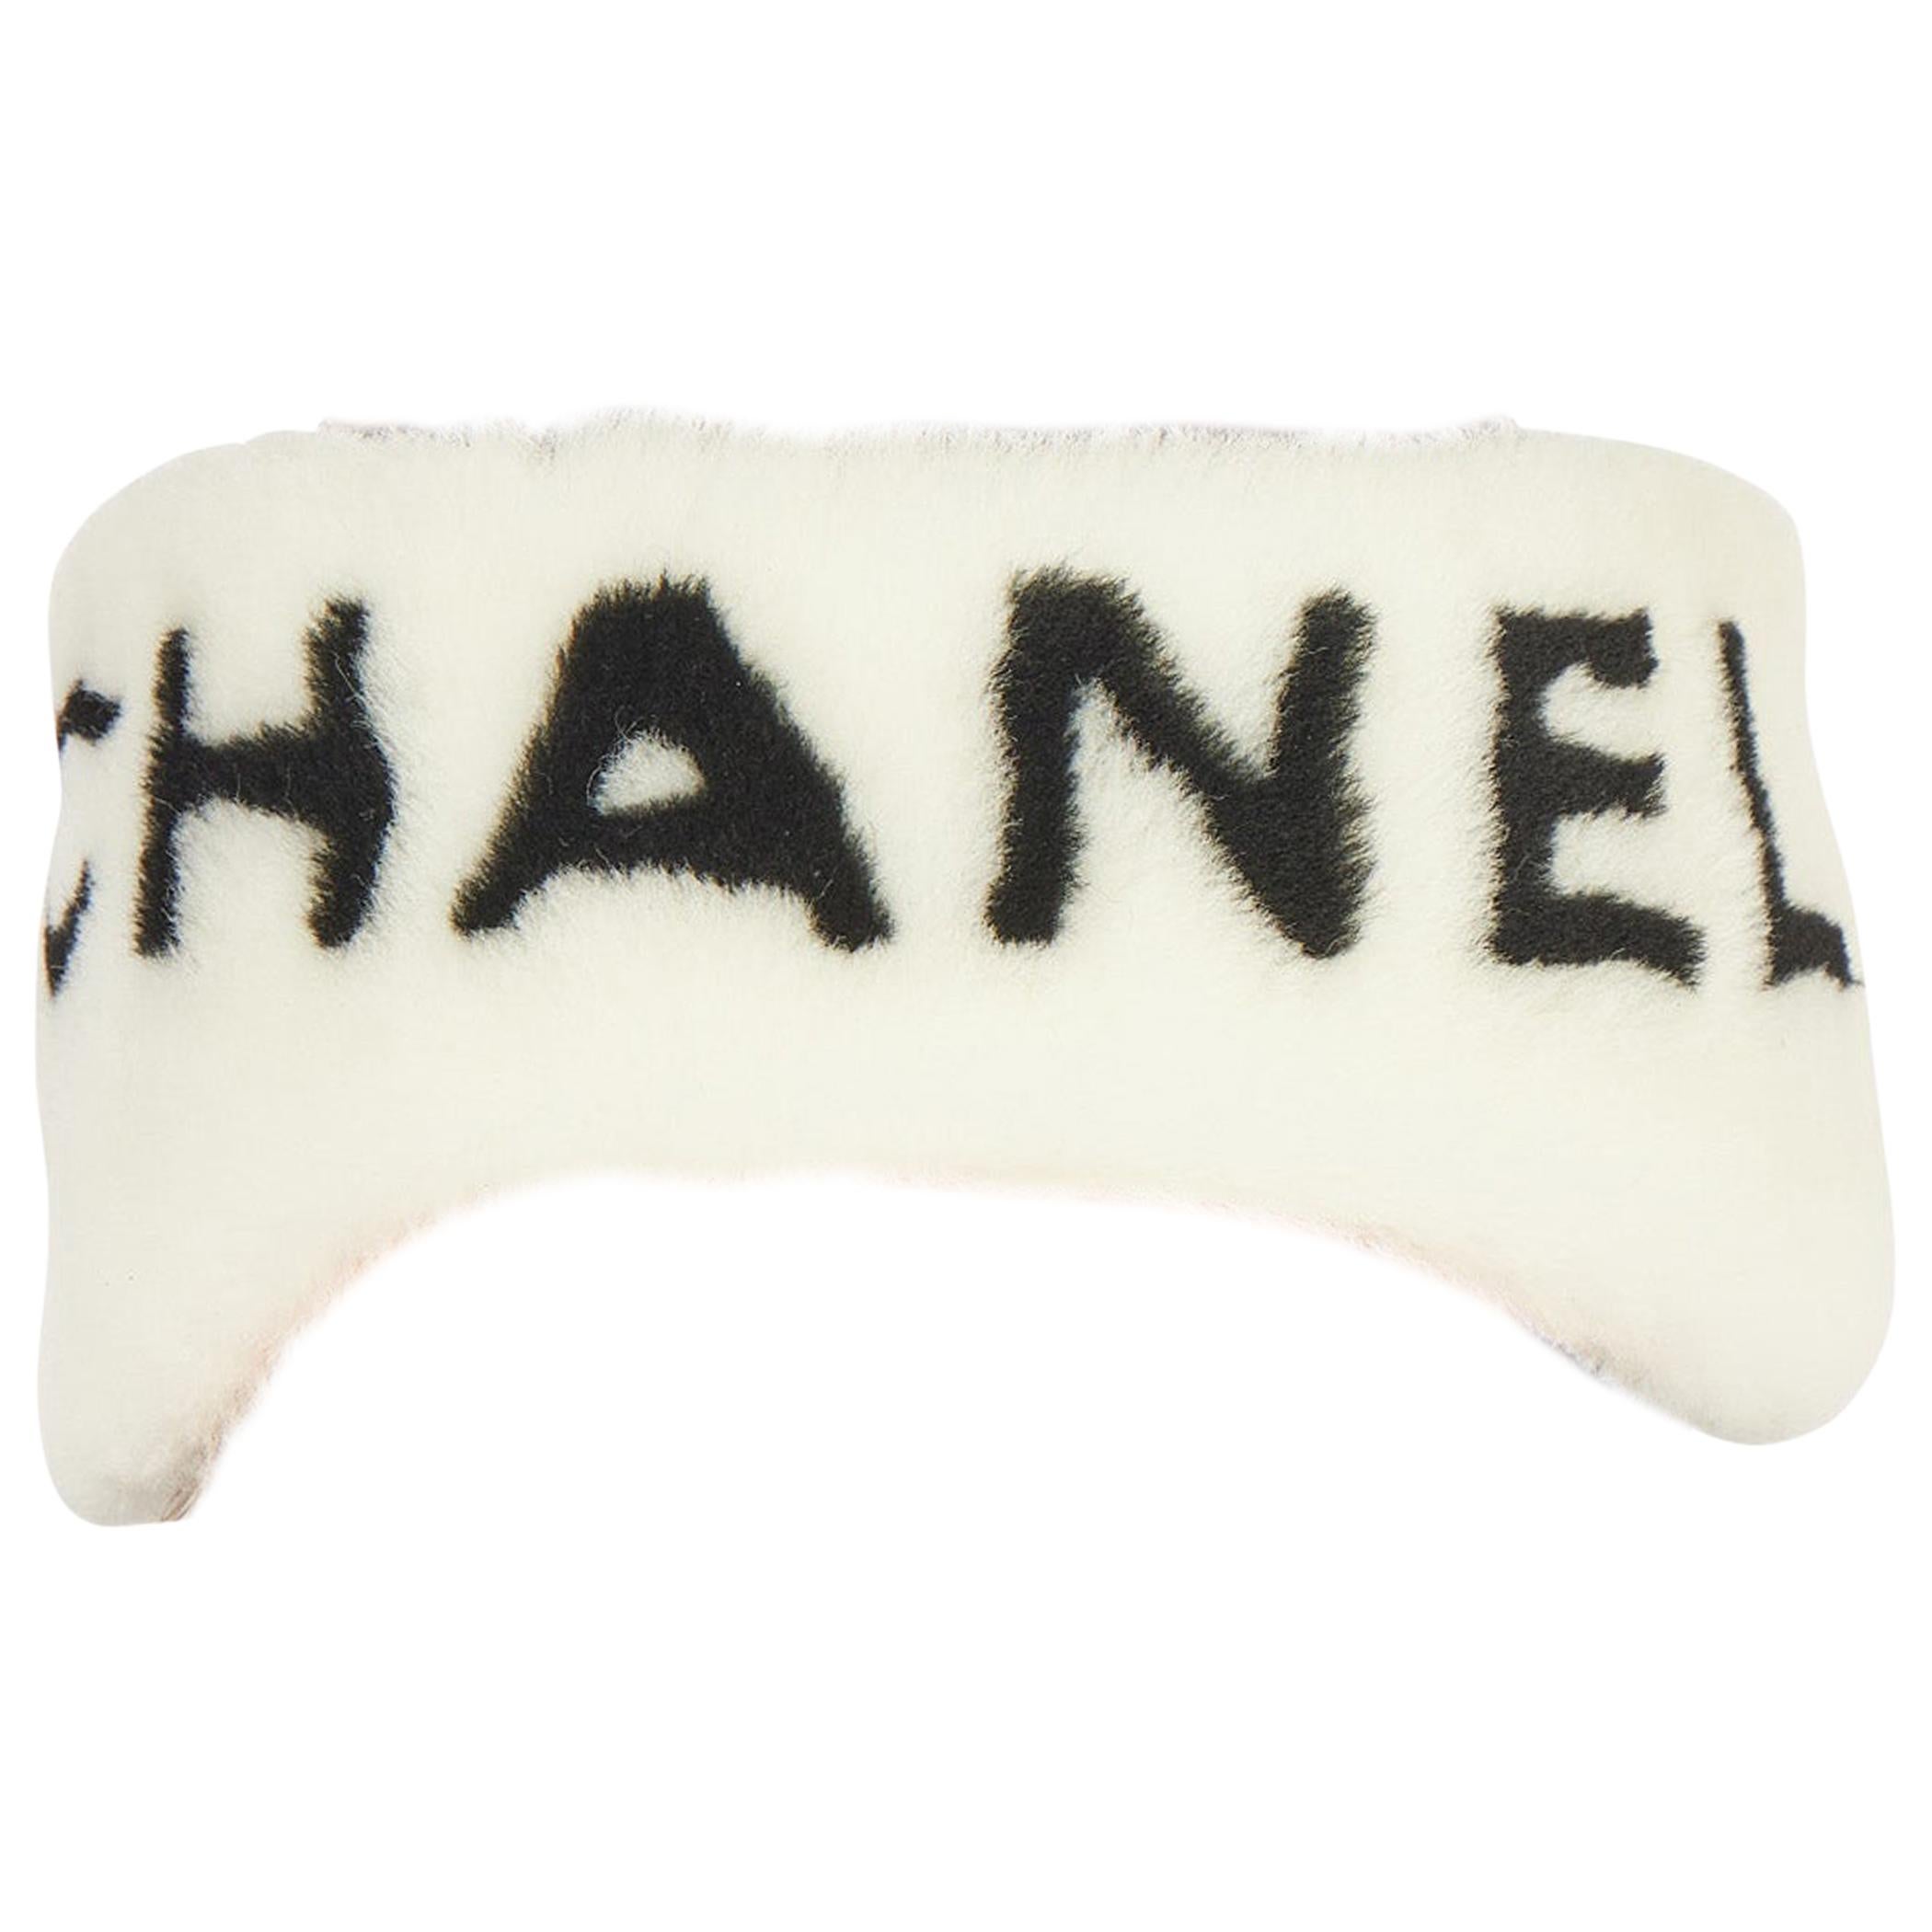 Bandeau Chanel blanc en peau de mouton, neuf dans sa boîte en vente